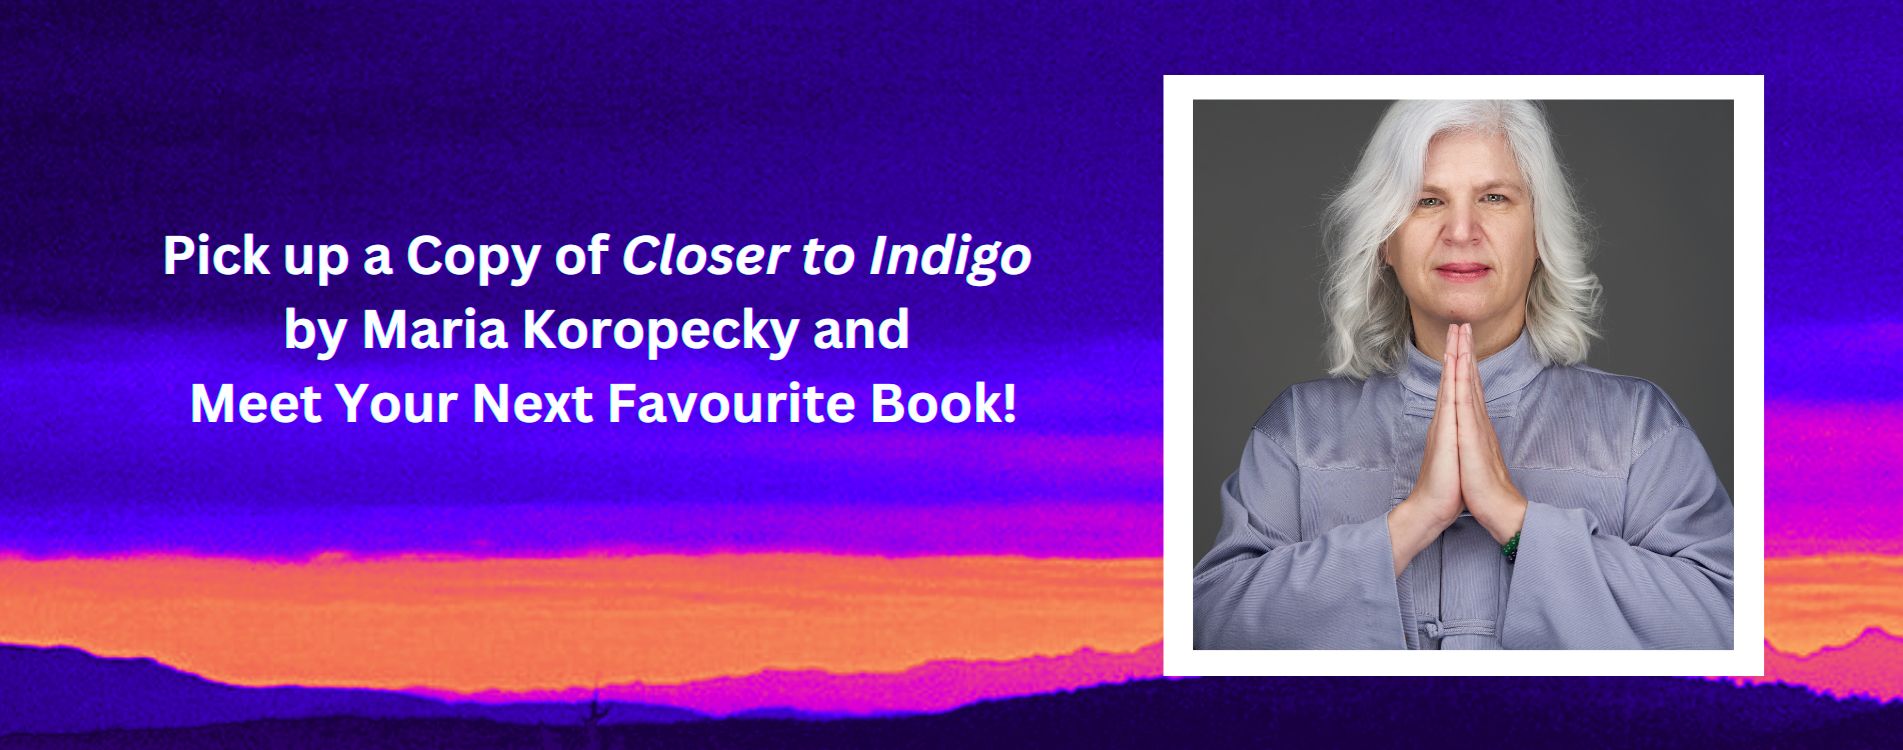 Pick up a copy of Closer to Indigo by Maria Koropecky.